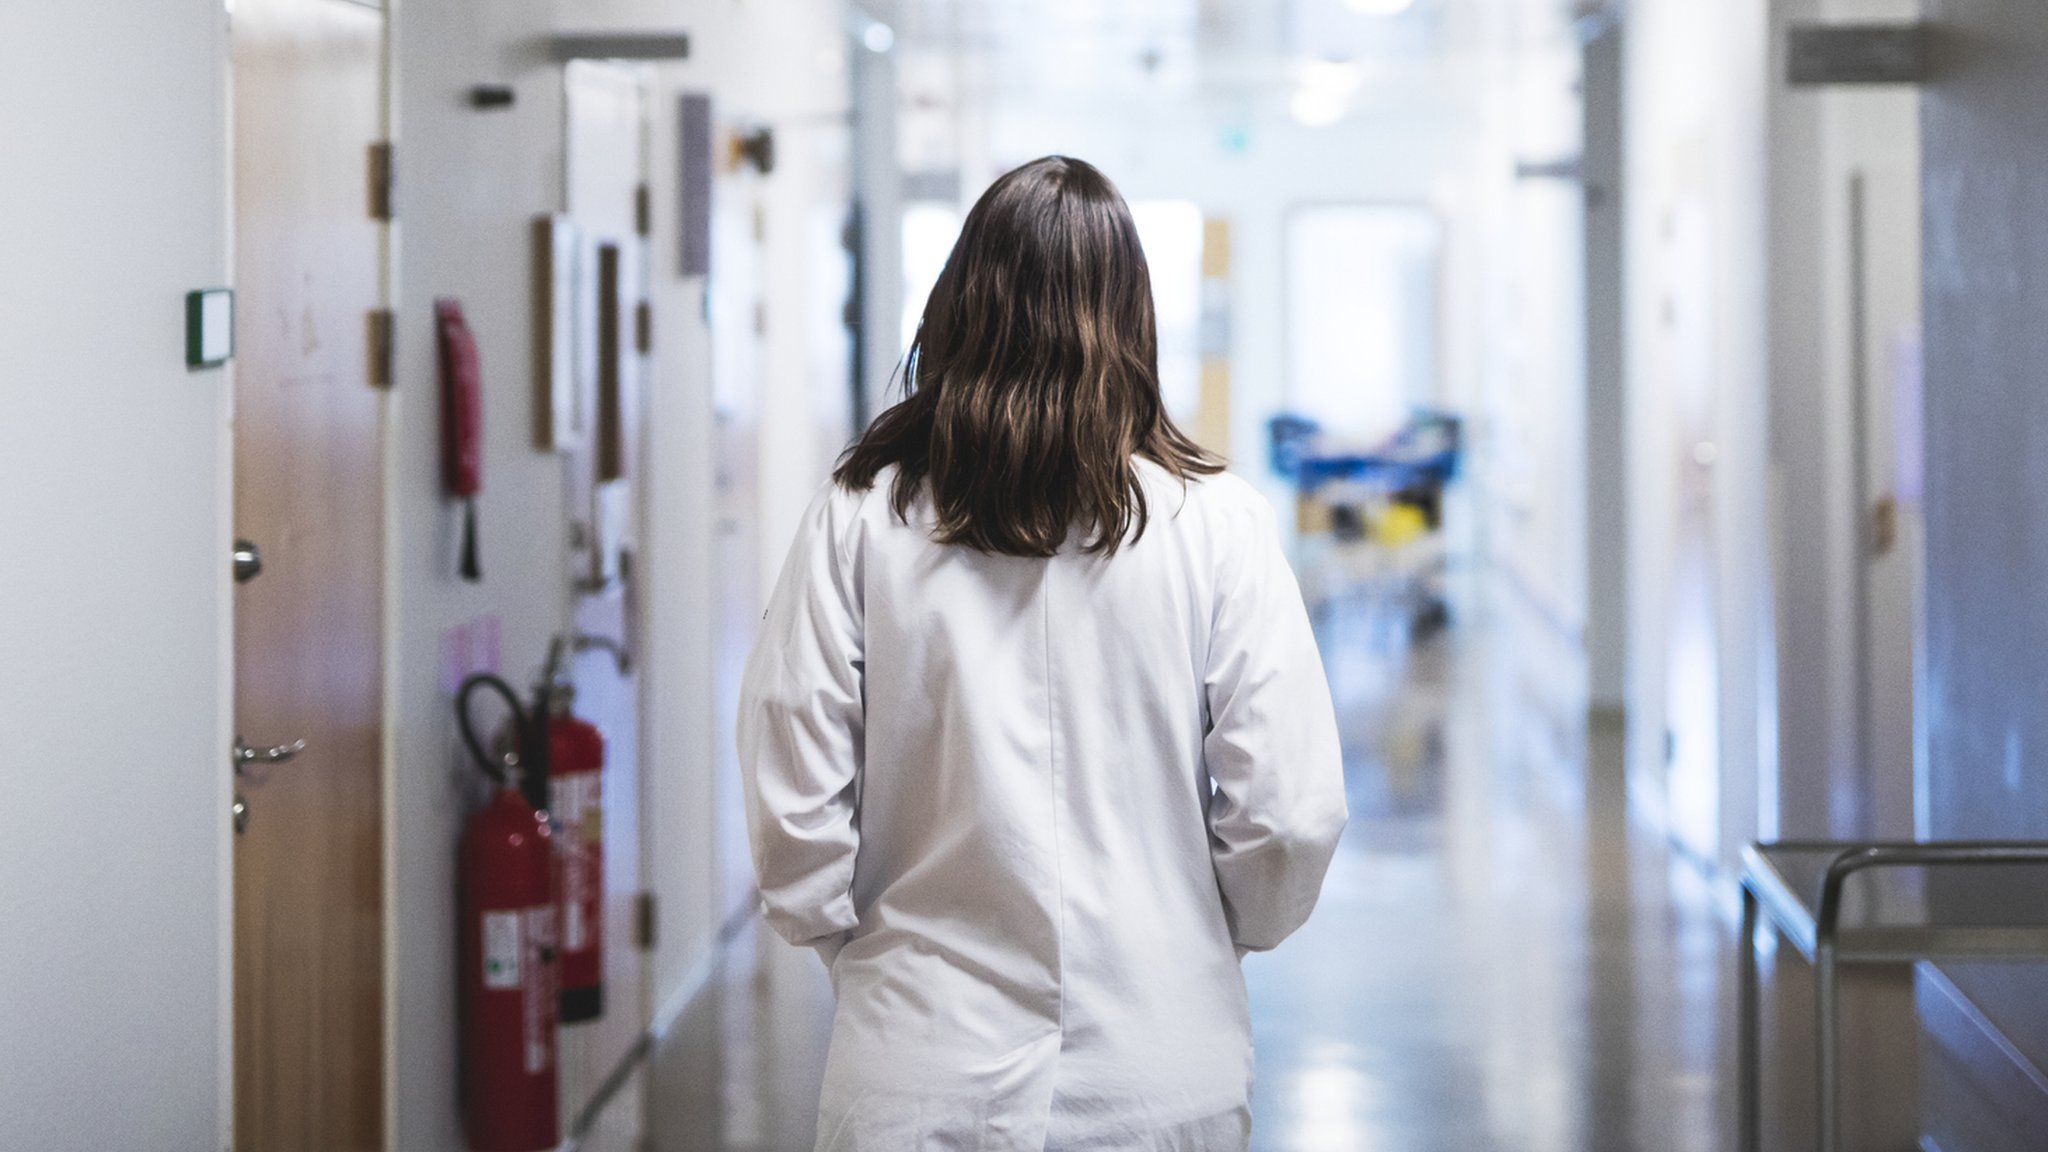 A doctor walking on a hospital corridor